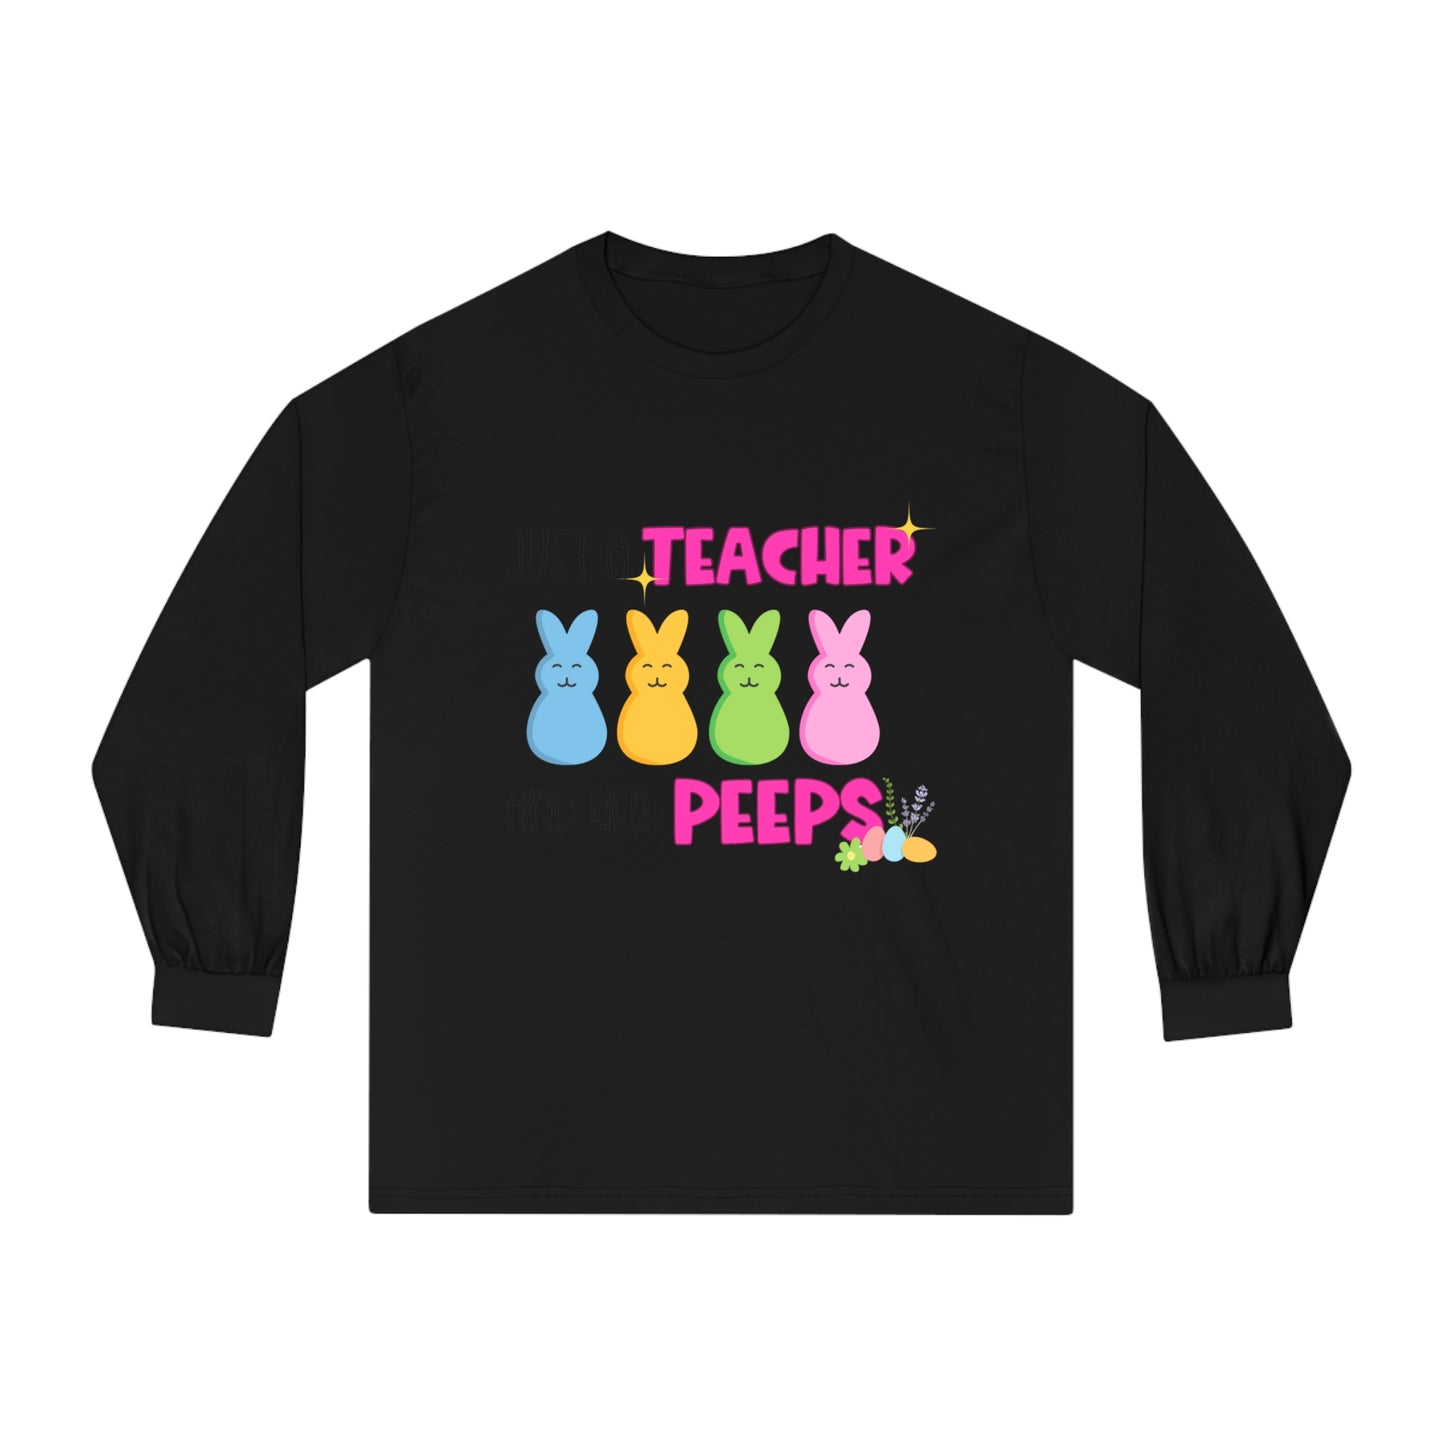 Just a Teacher and her Peeps  - Unisex Classic Long Sleeve T-Shirt